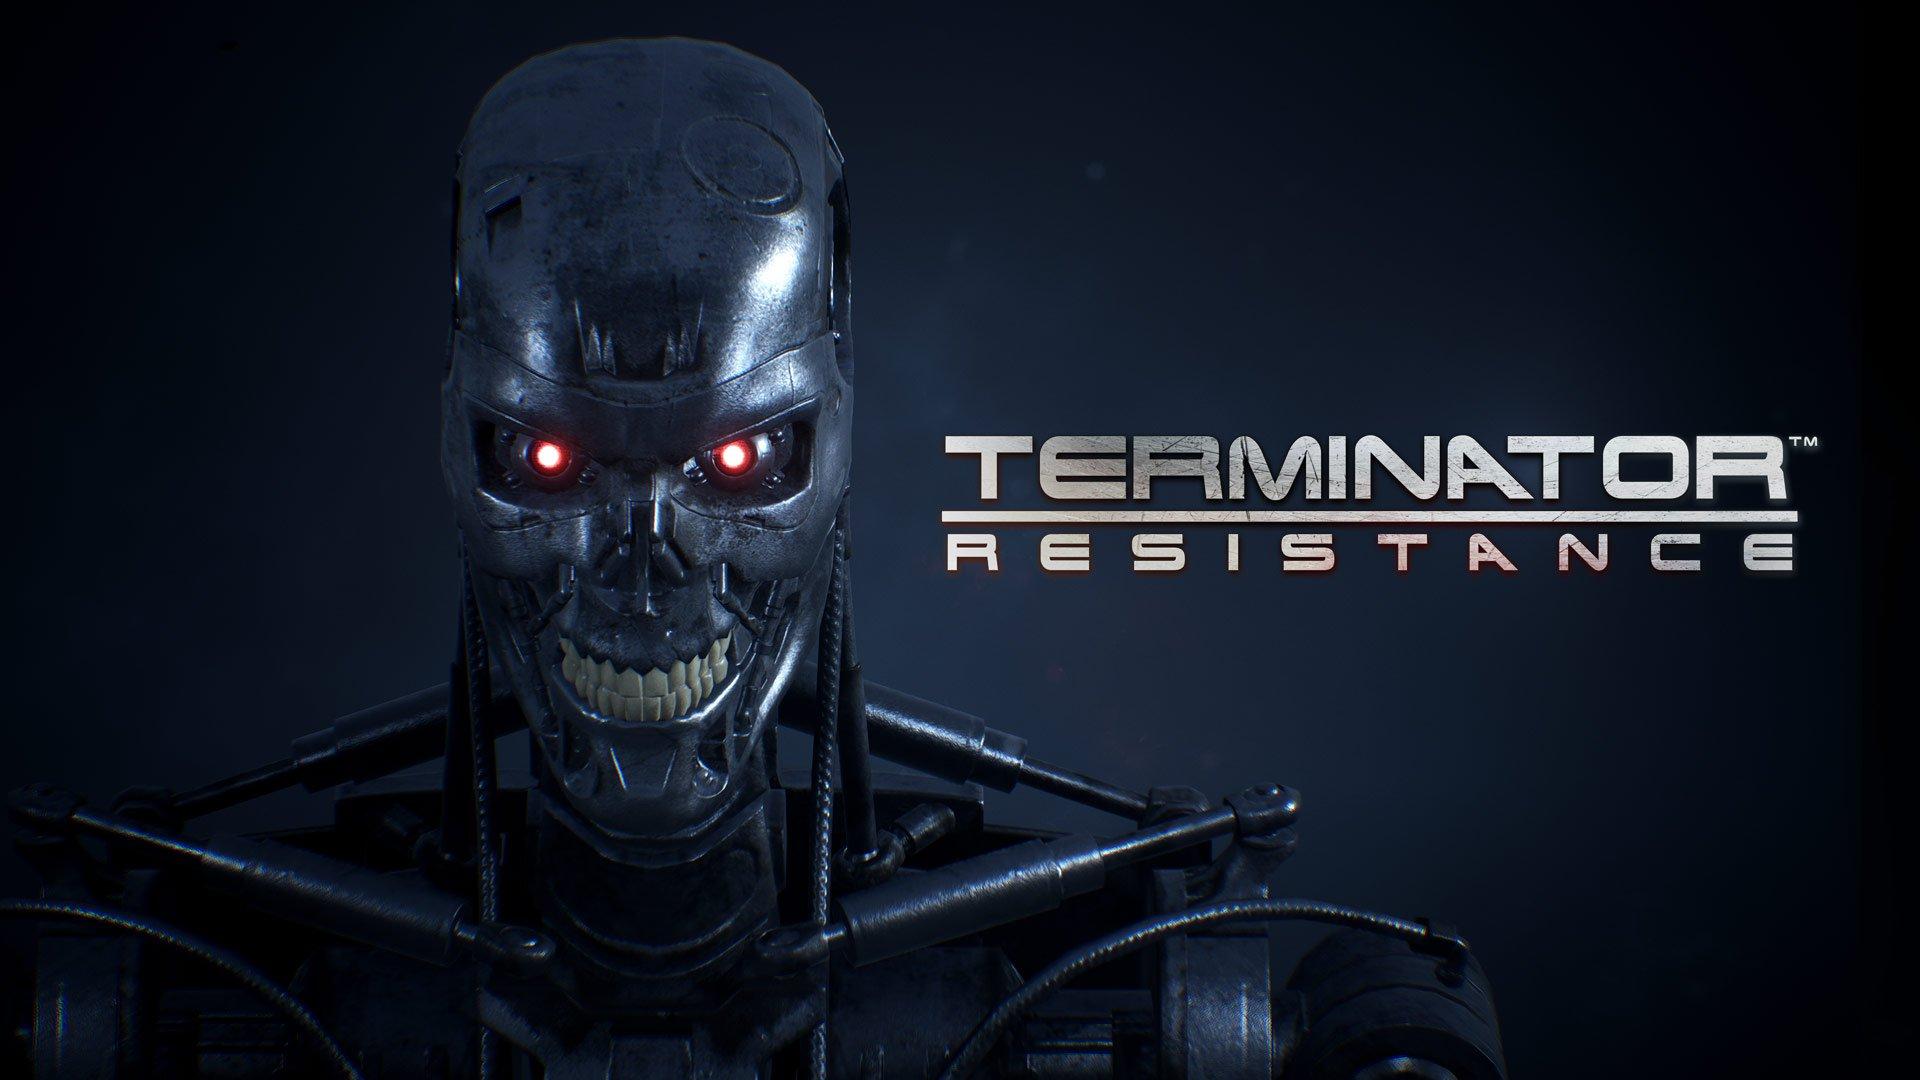 Terminator annihilation. Игра Терминатор резистанс. Т-850 Terminator Resistance. Terminator игра 2019. Т-800 Терминатор в играх.